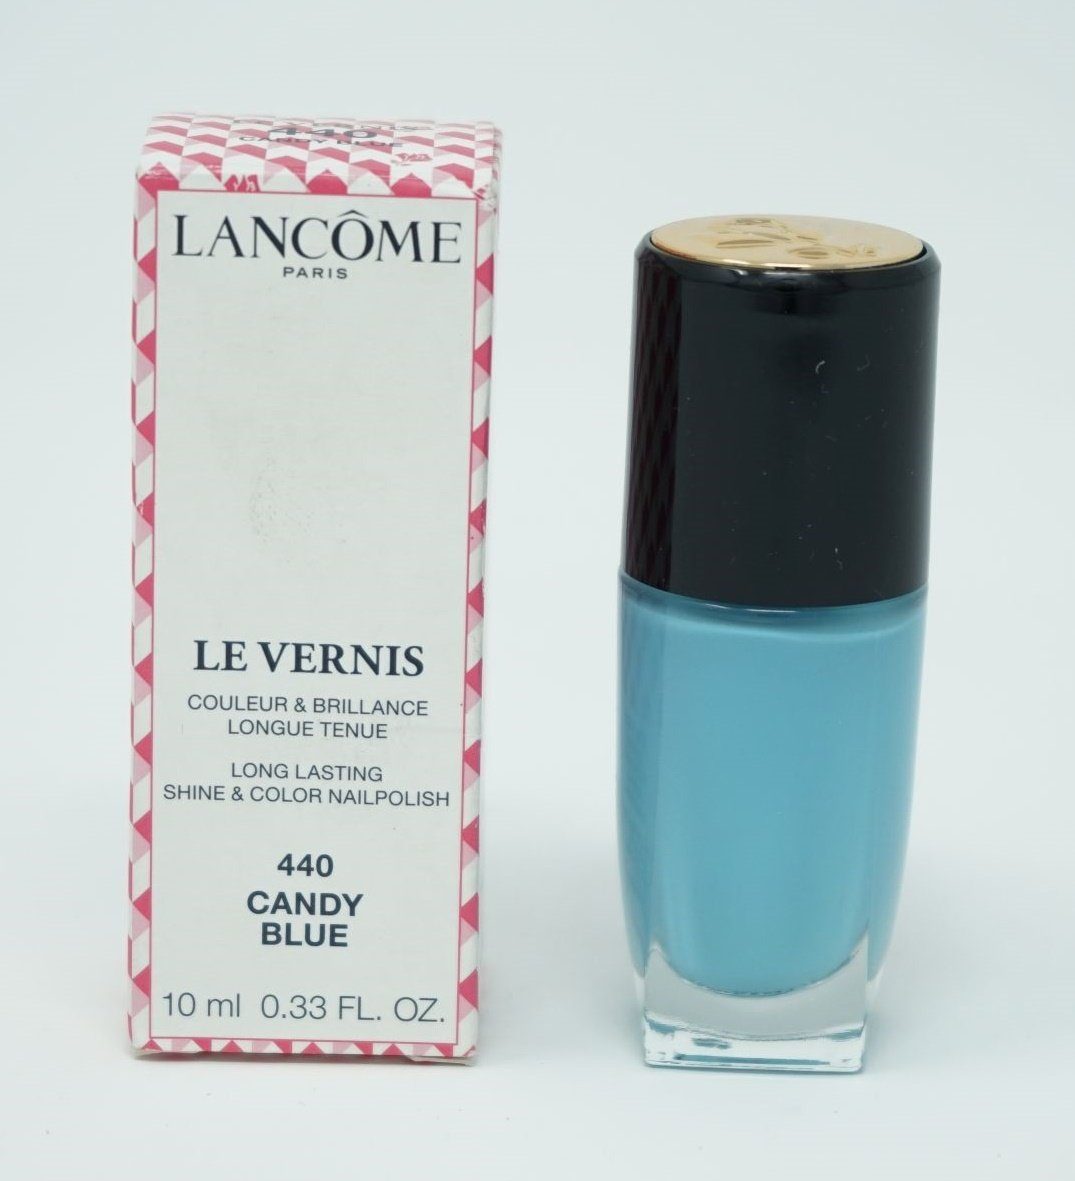 LANCOME Nagellack Lancome Le Vernis Nagellack long lasting 10ml 440 Candy Blue